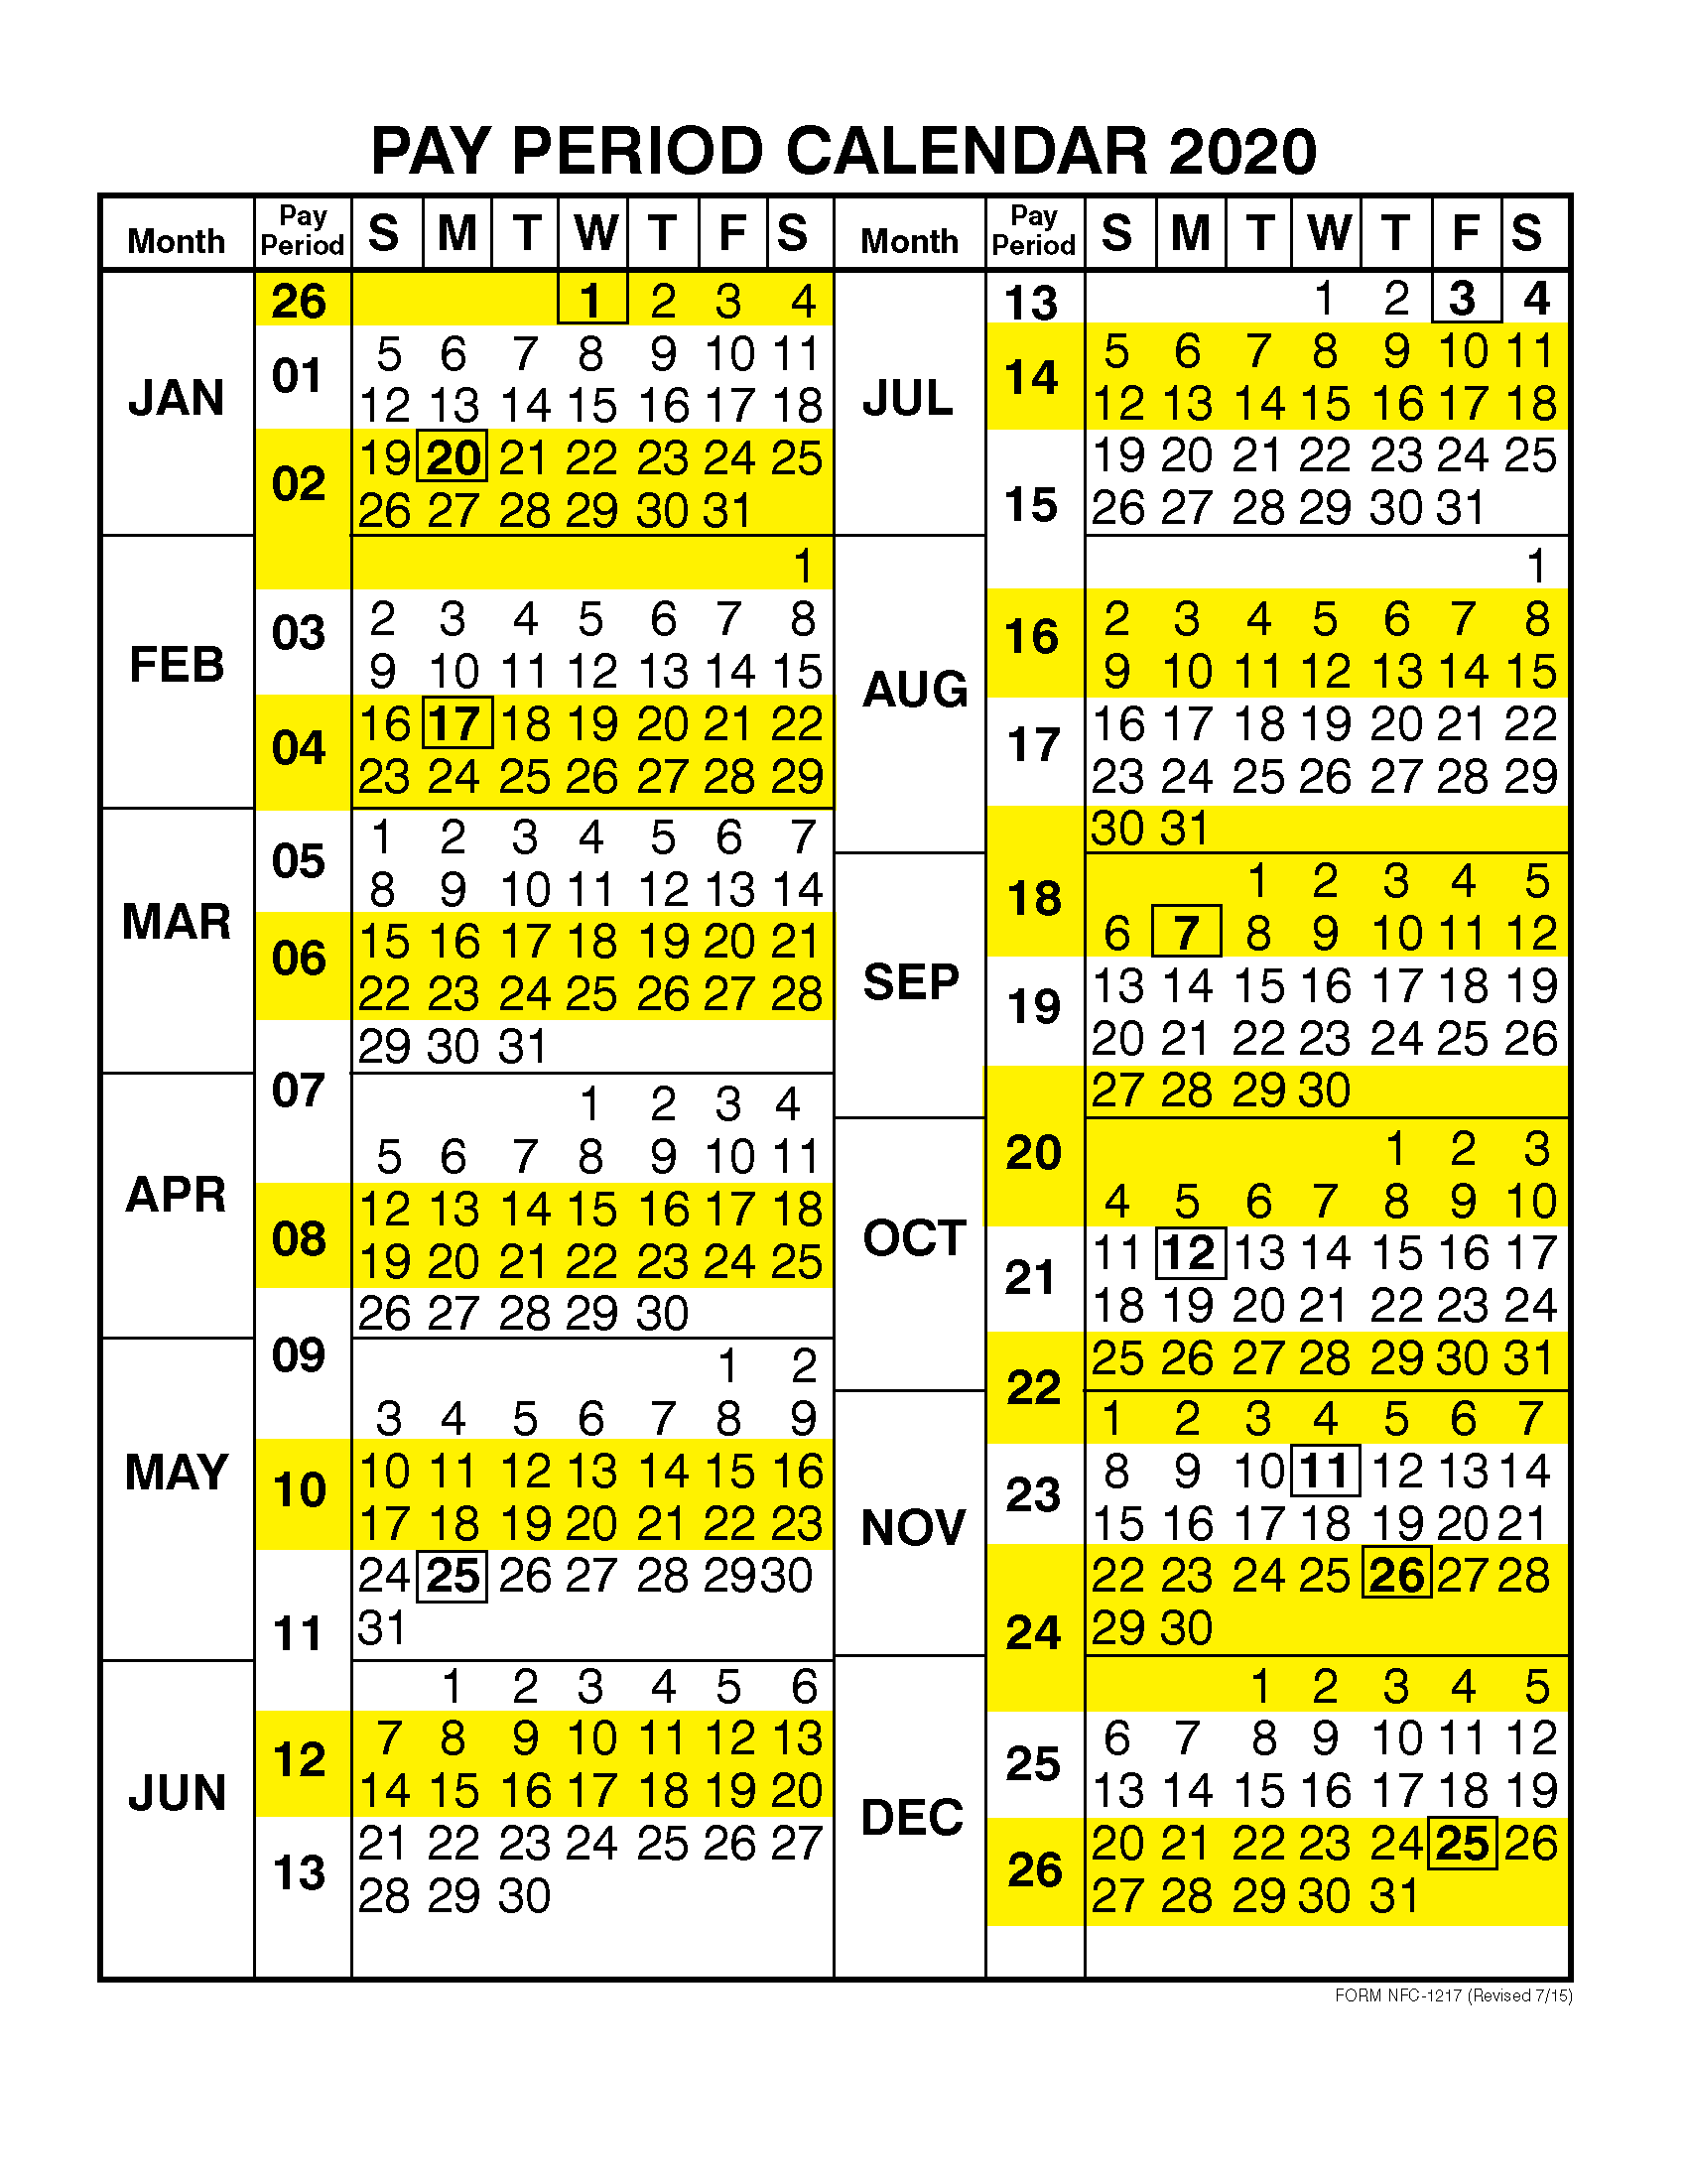 tsa pay calendar 2021 Pay Period Calendar 2020 By Calendar Year Free Printable 2020 Monthly Calendar With Holidays tsa pay calendar 2021